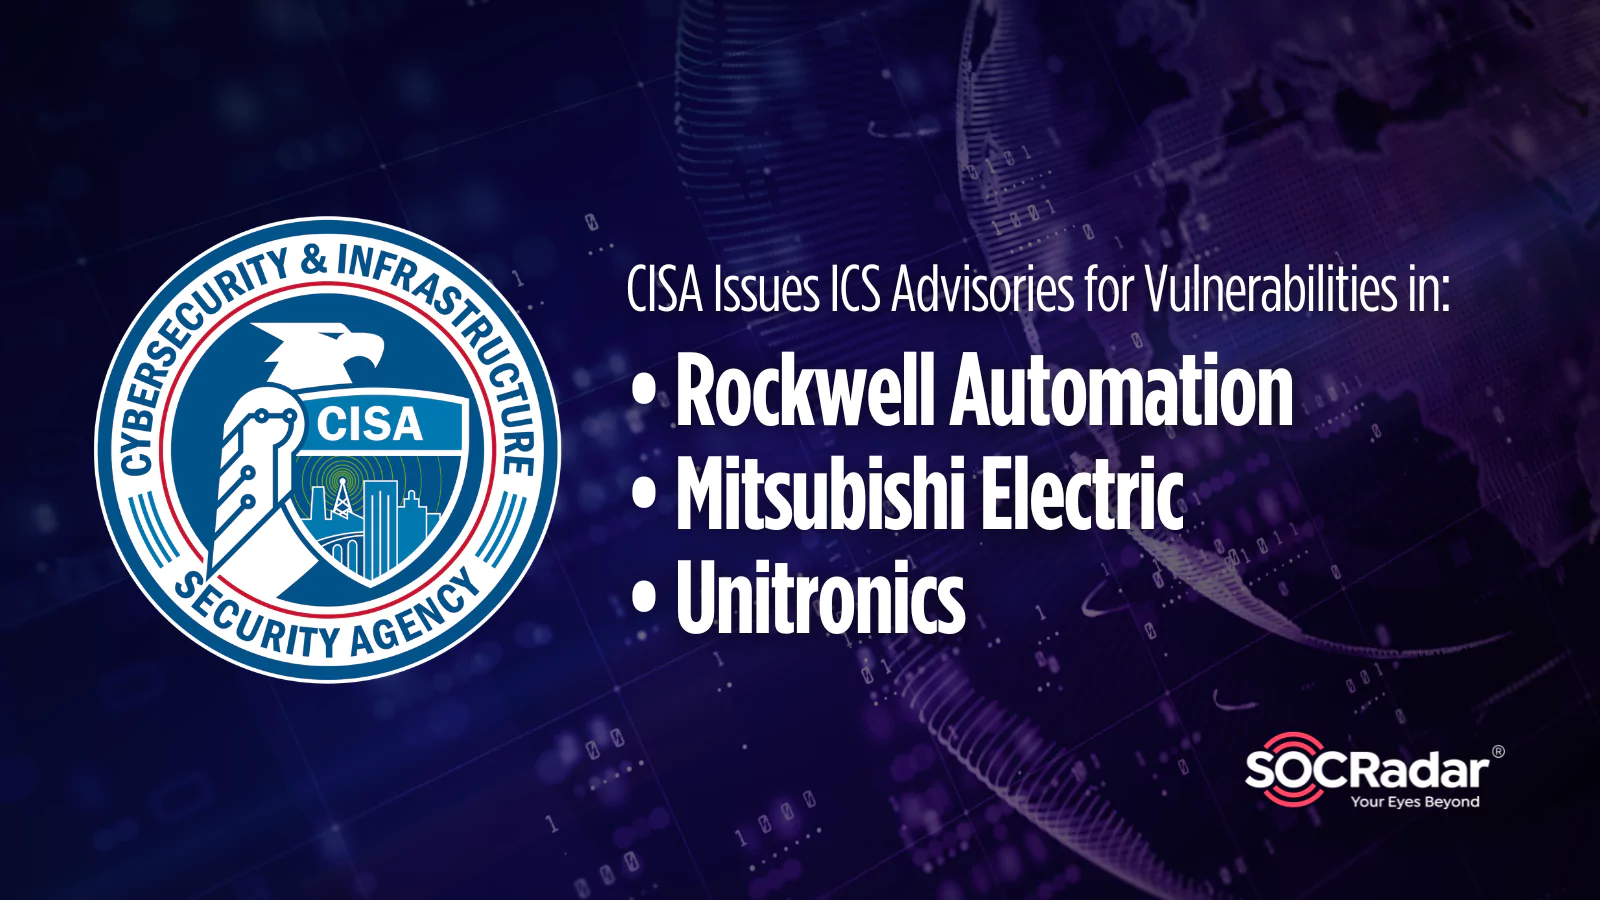 SOCRadar® Cyber Intelligence Inc. | CISA Issues ICS Advisories for Vulnerabilities Affecting Rockwell Automation, Mitsubishi Electric, and Unitronics